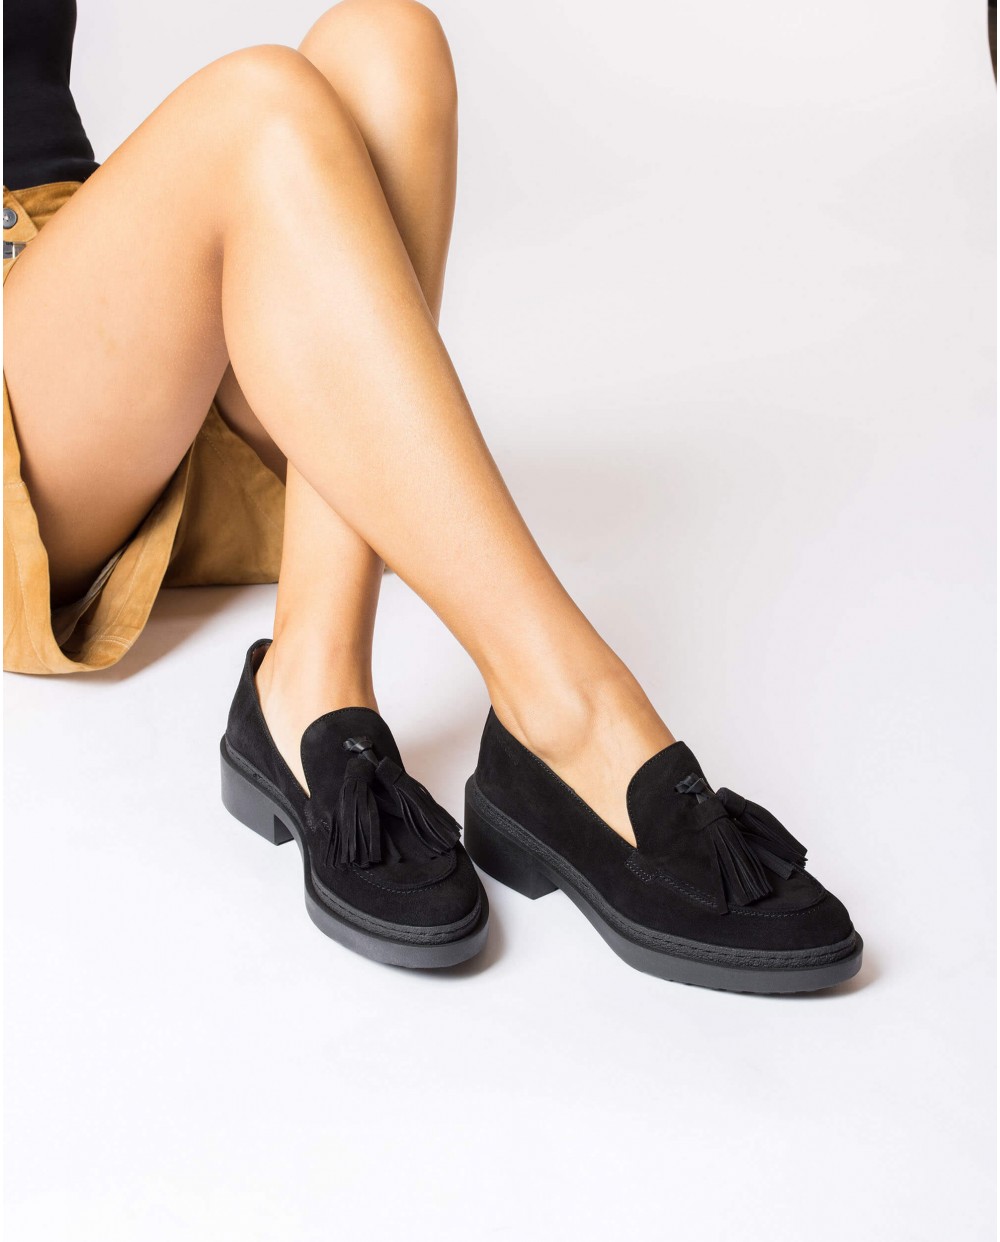 Wonders-Flat Shoes-Black Bea Moccasin